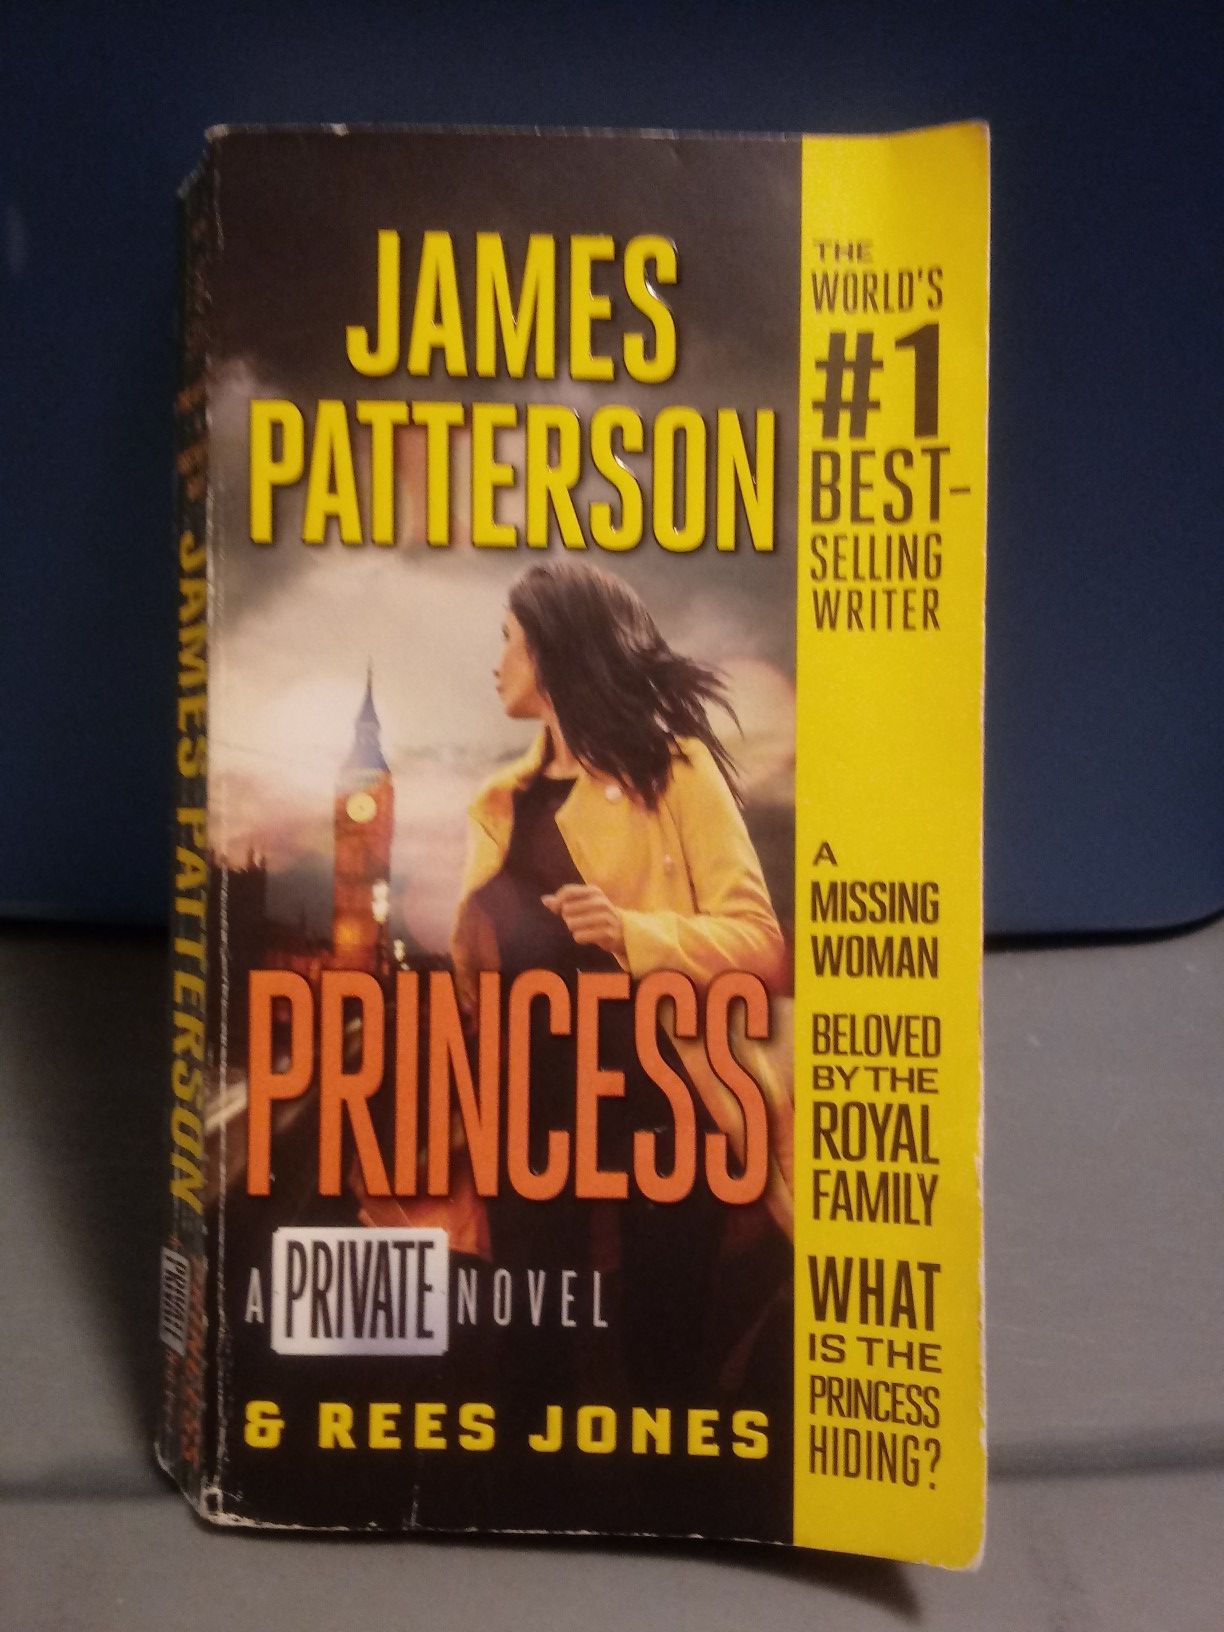 PRINCESS A Private novel